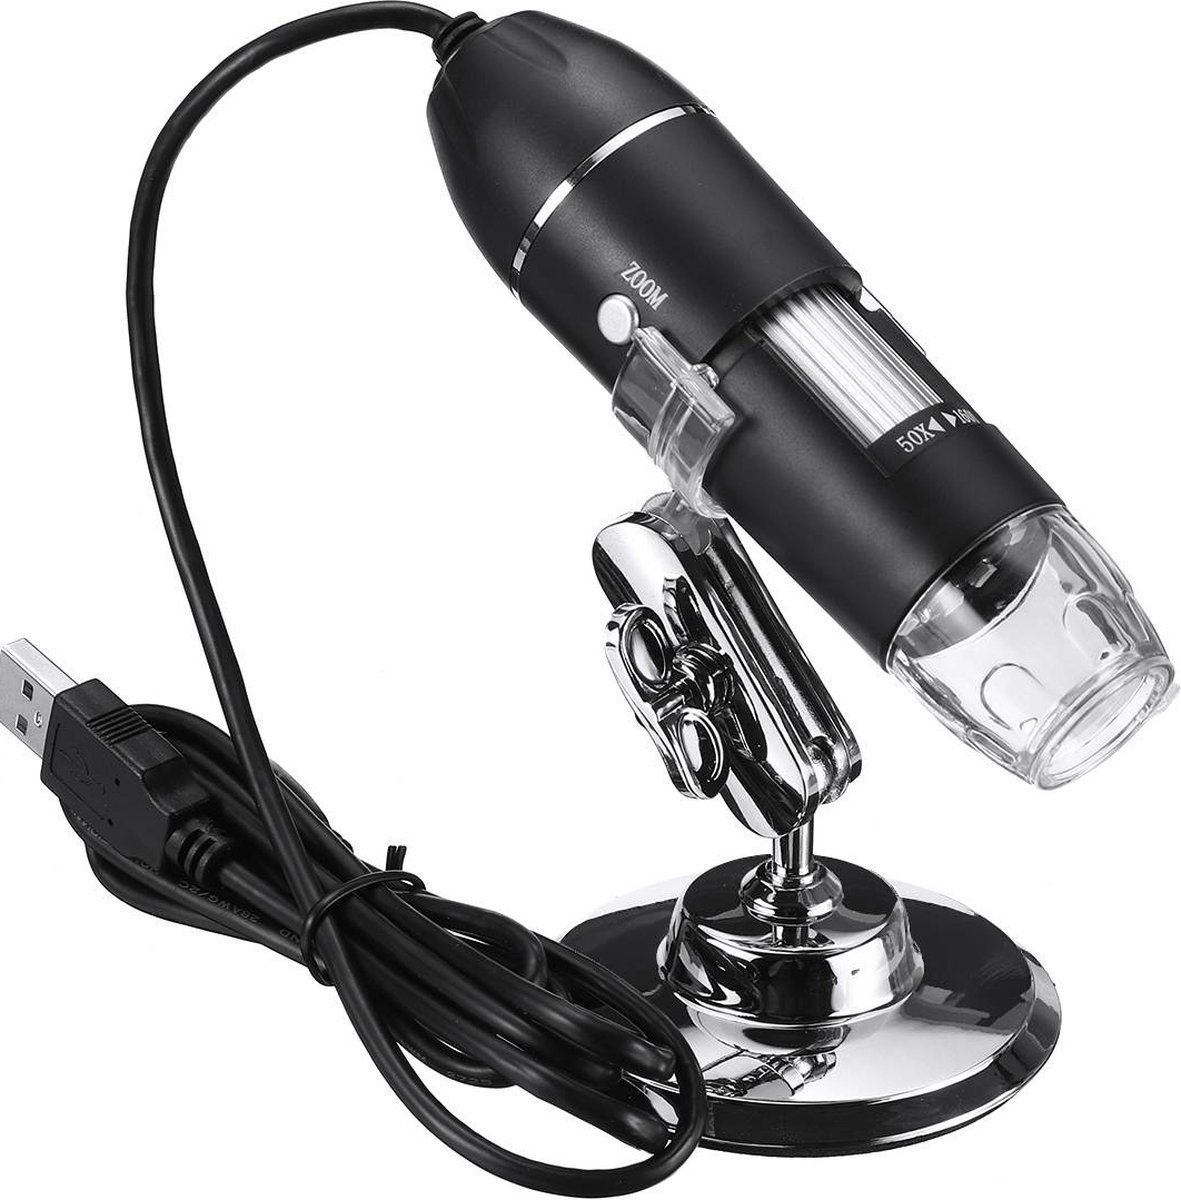 Bolture Draadloze Microscoop - Digitale Microscoop Met 1600x Vergroting - Microscoop Met Flexibele Standaard - 3-in-1 USB-C Handheld Microscoop